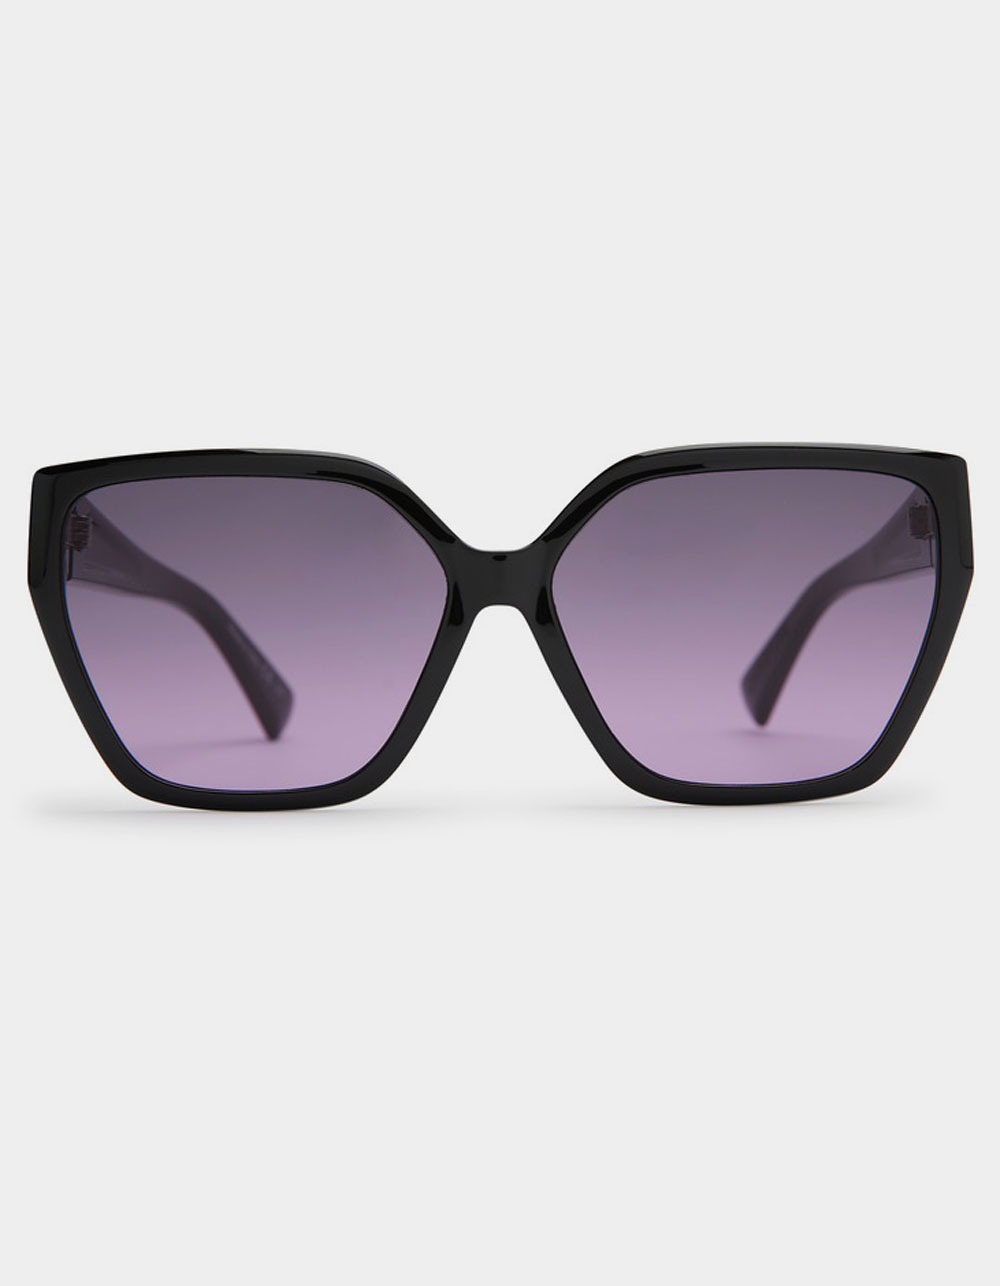 VONZIPPER Overture Black & Purple Sunglasses - PURPLE/BLACK | Tillys